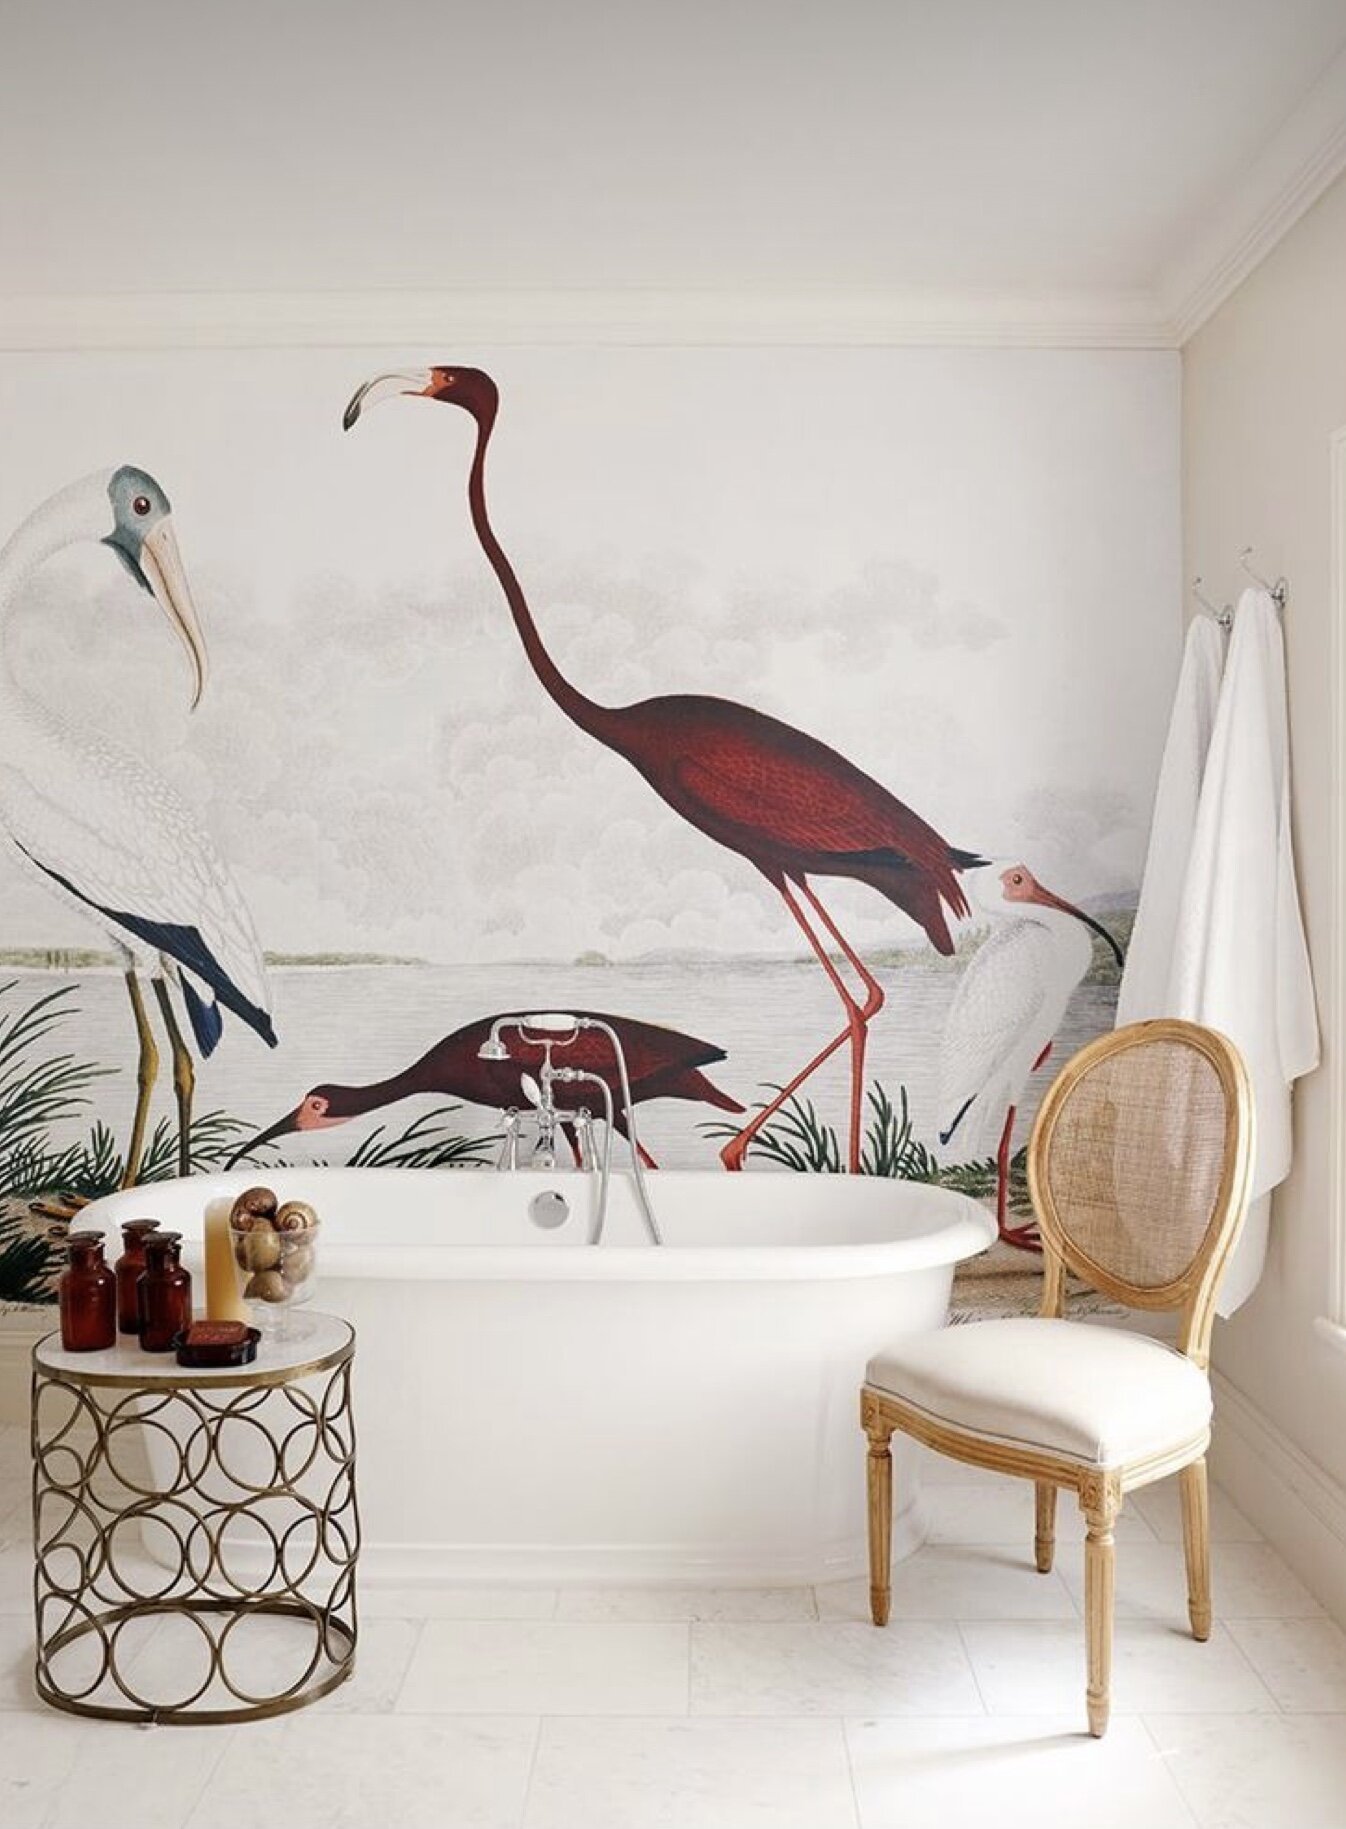 bathroom design with crane wallpaper  behind freestanding tub